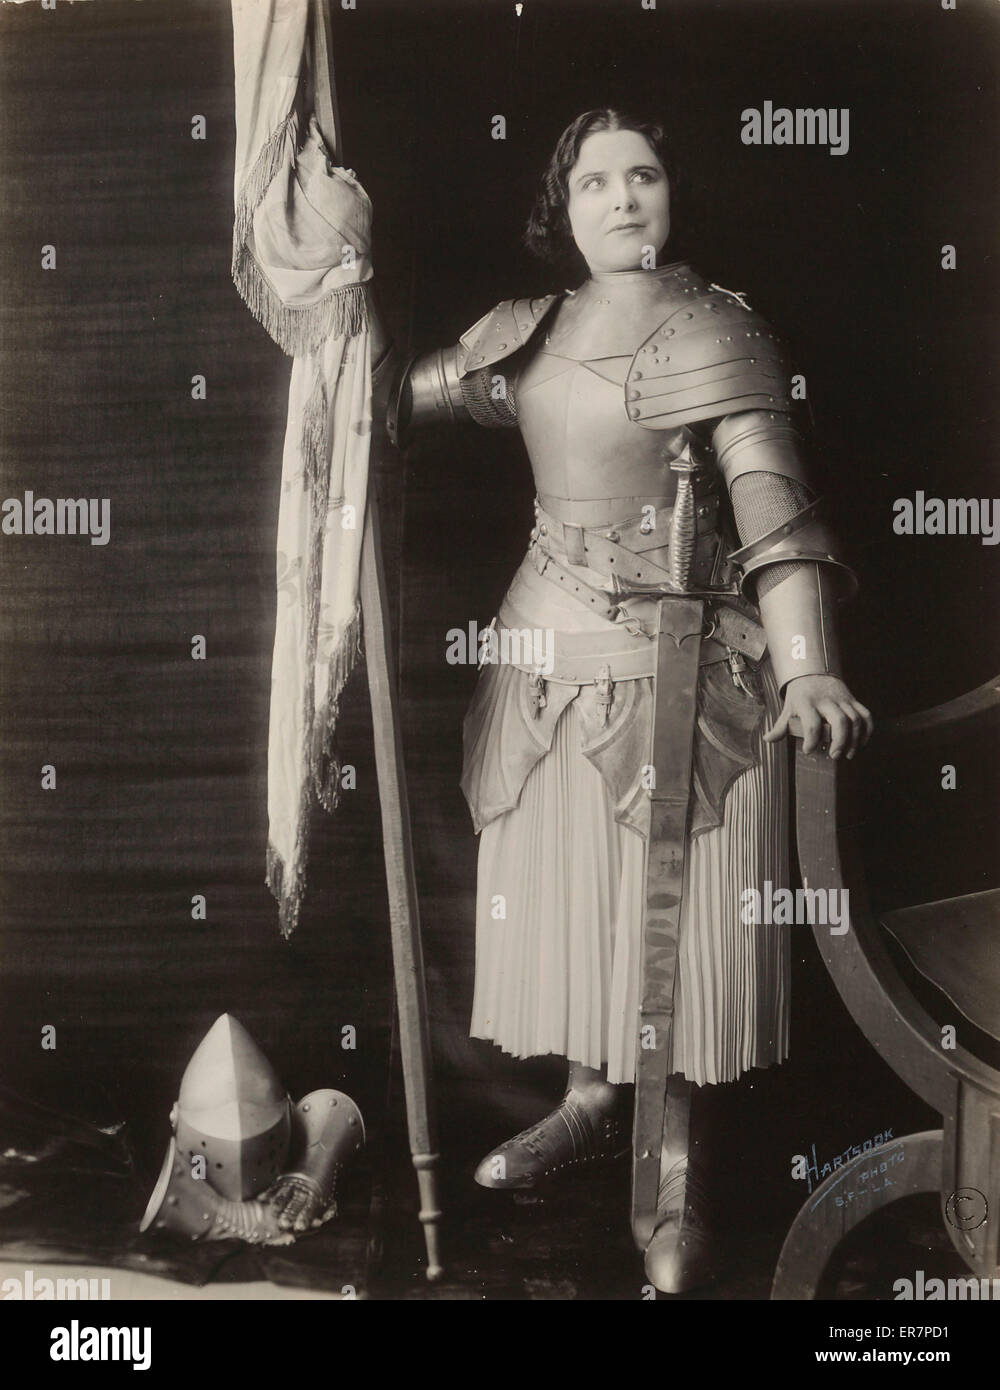 Geraldine Farrar, dressed in costume as Joan of Arc, holding Stock Photo